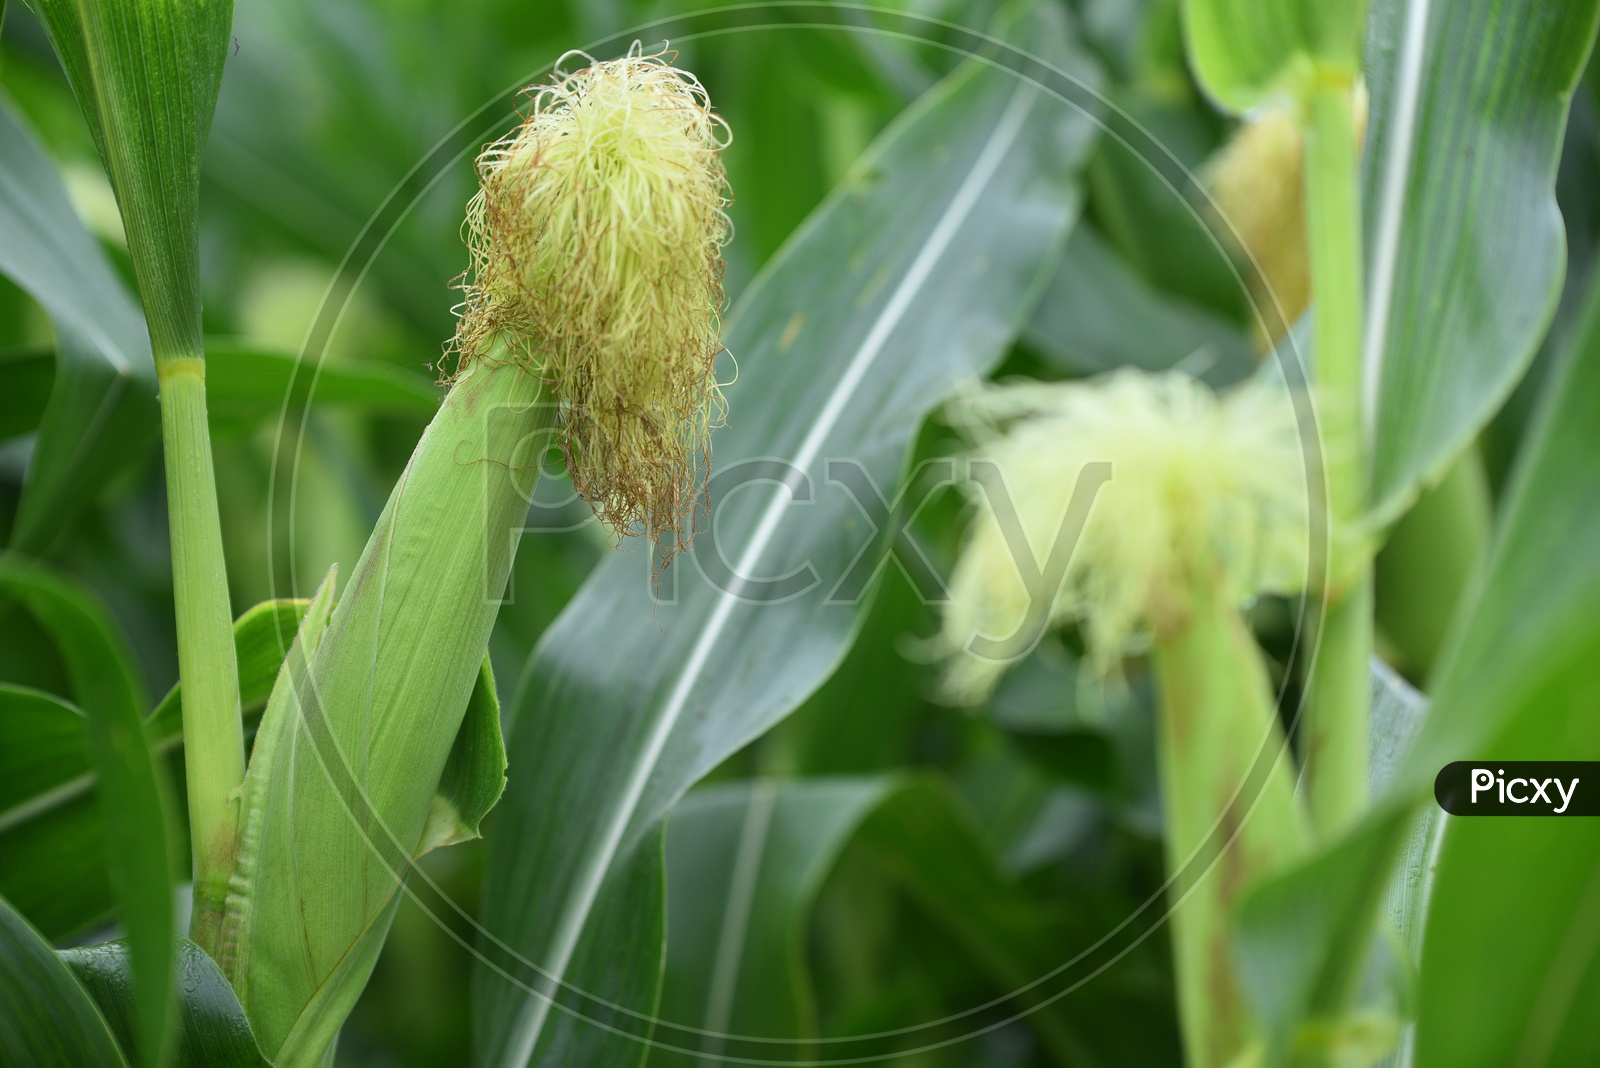 The corn or Maize in bright green in the corn field